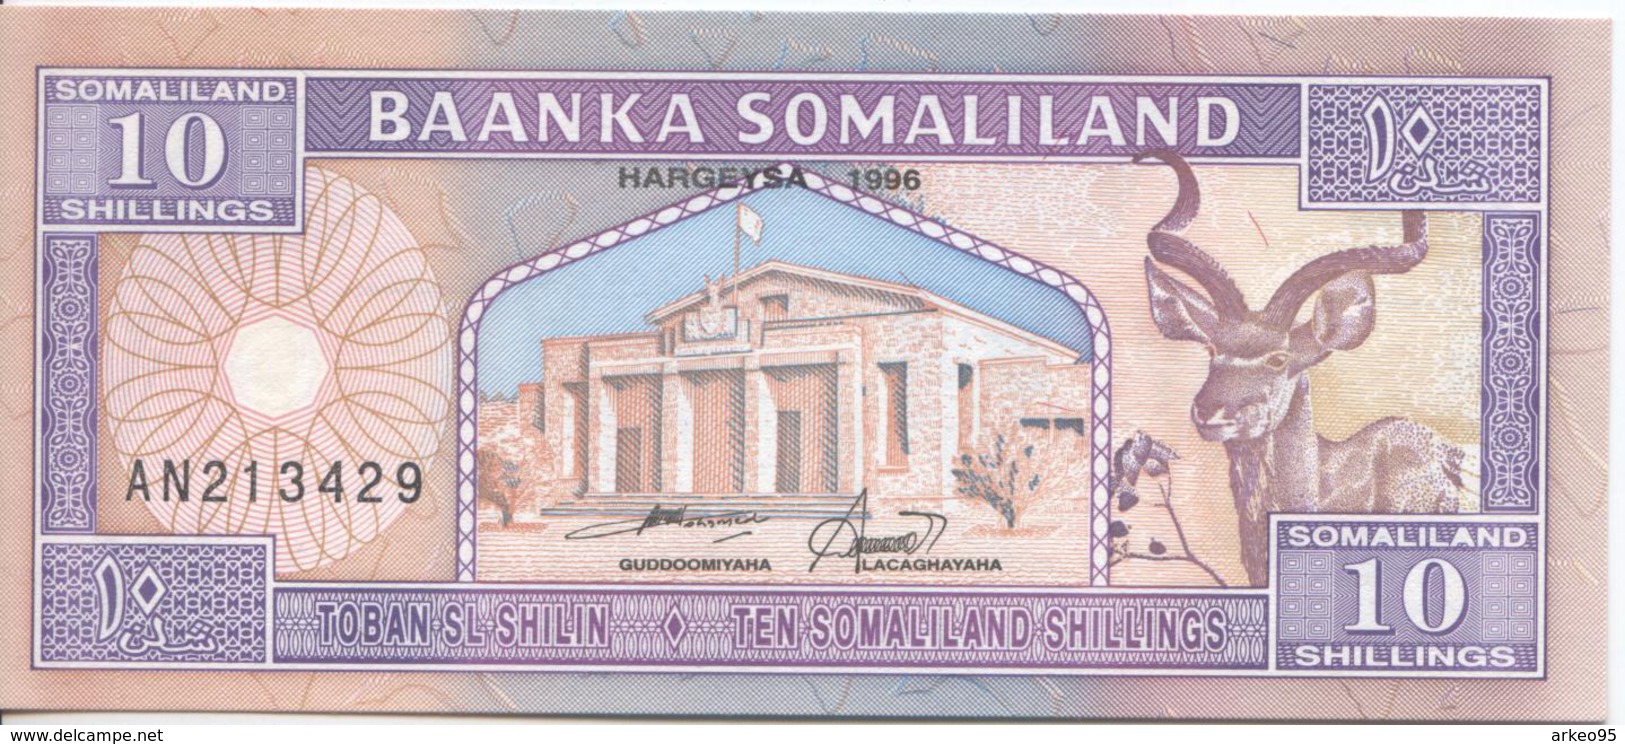 Billet De 10 Shillings Du Somaliland, Très Bon état - Somalia